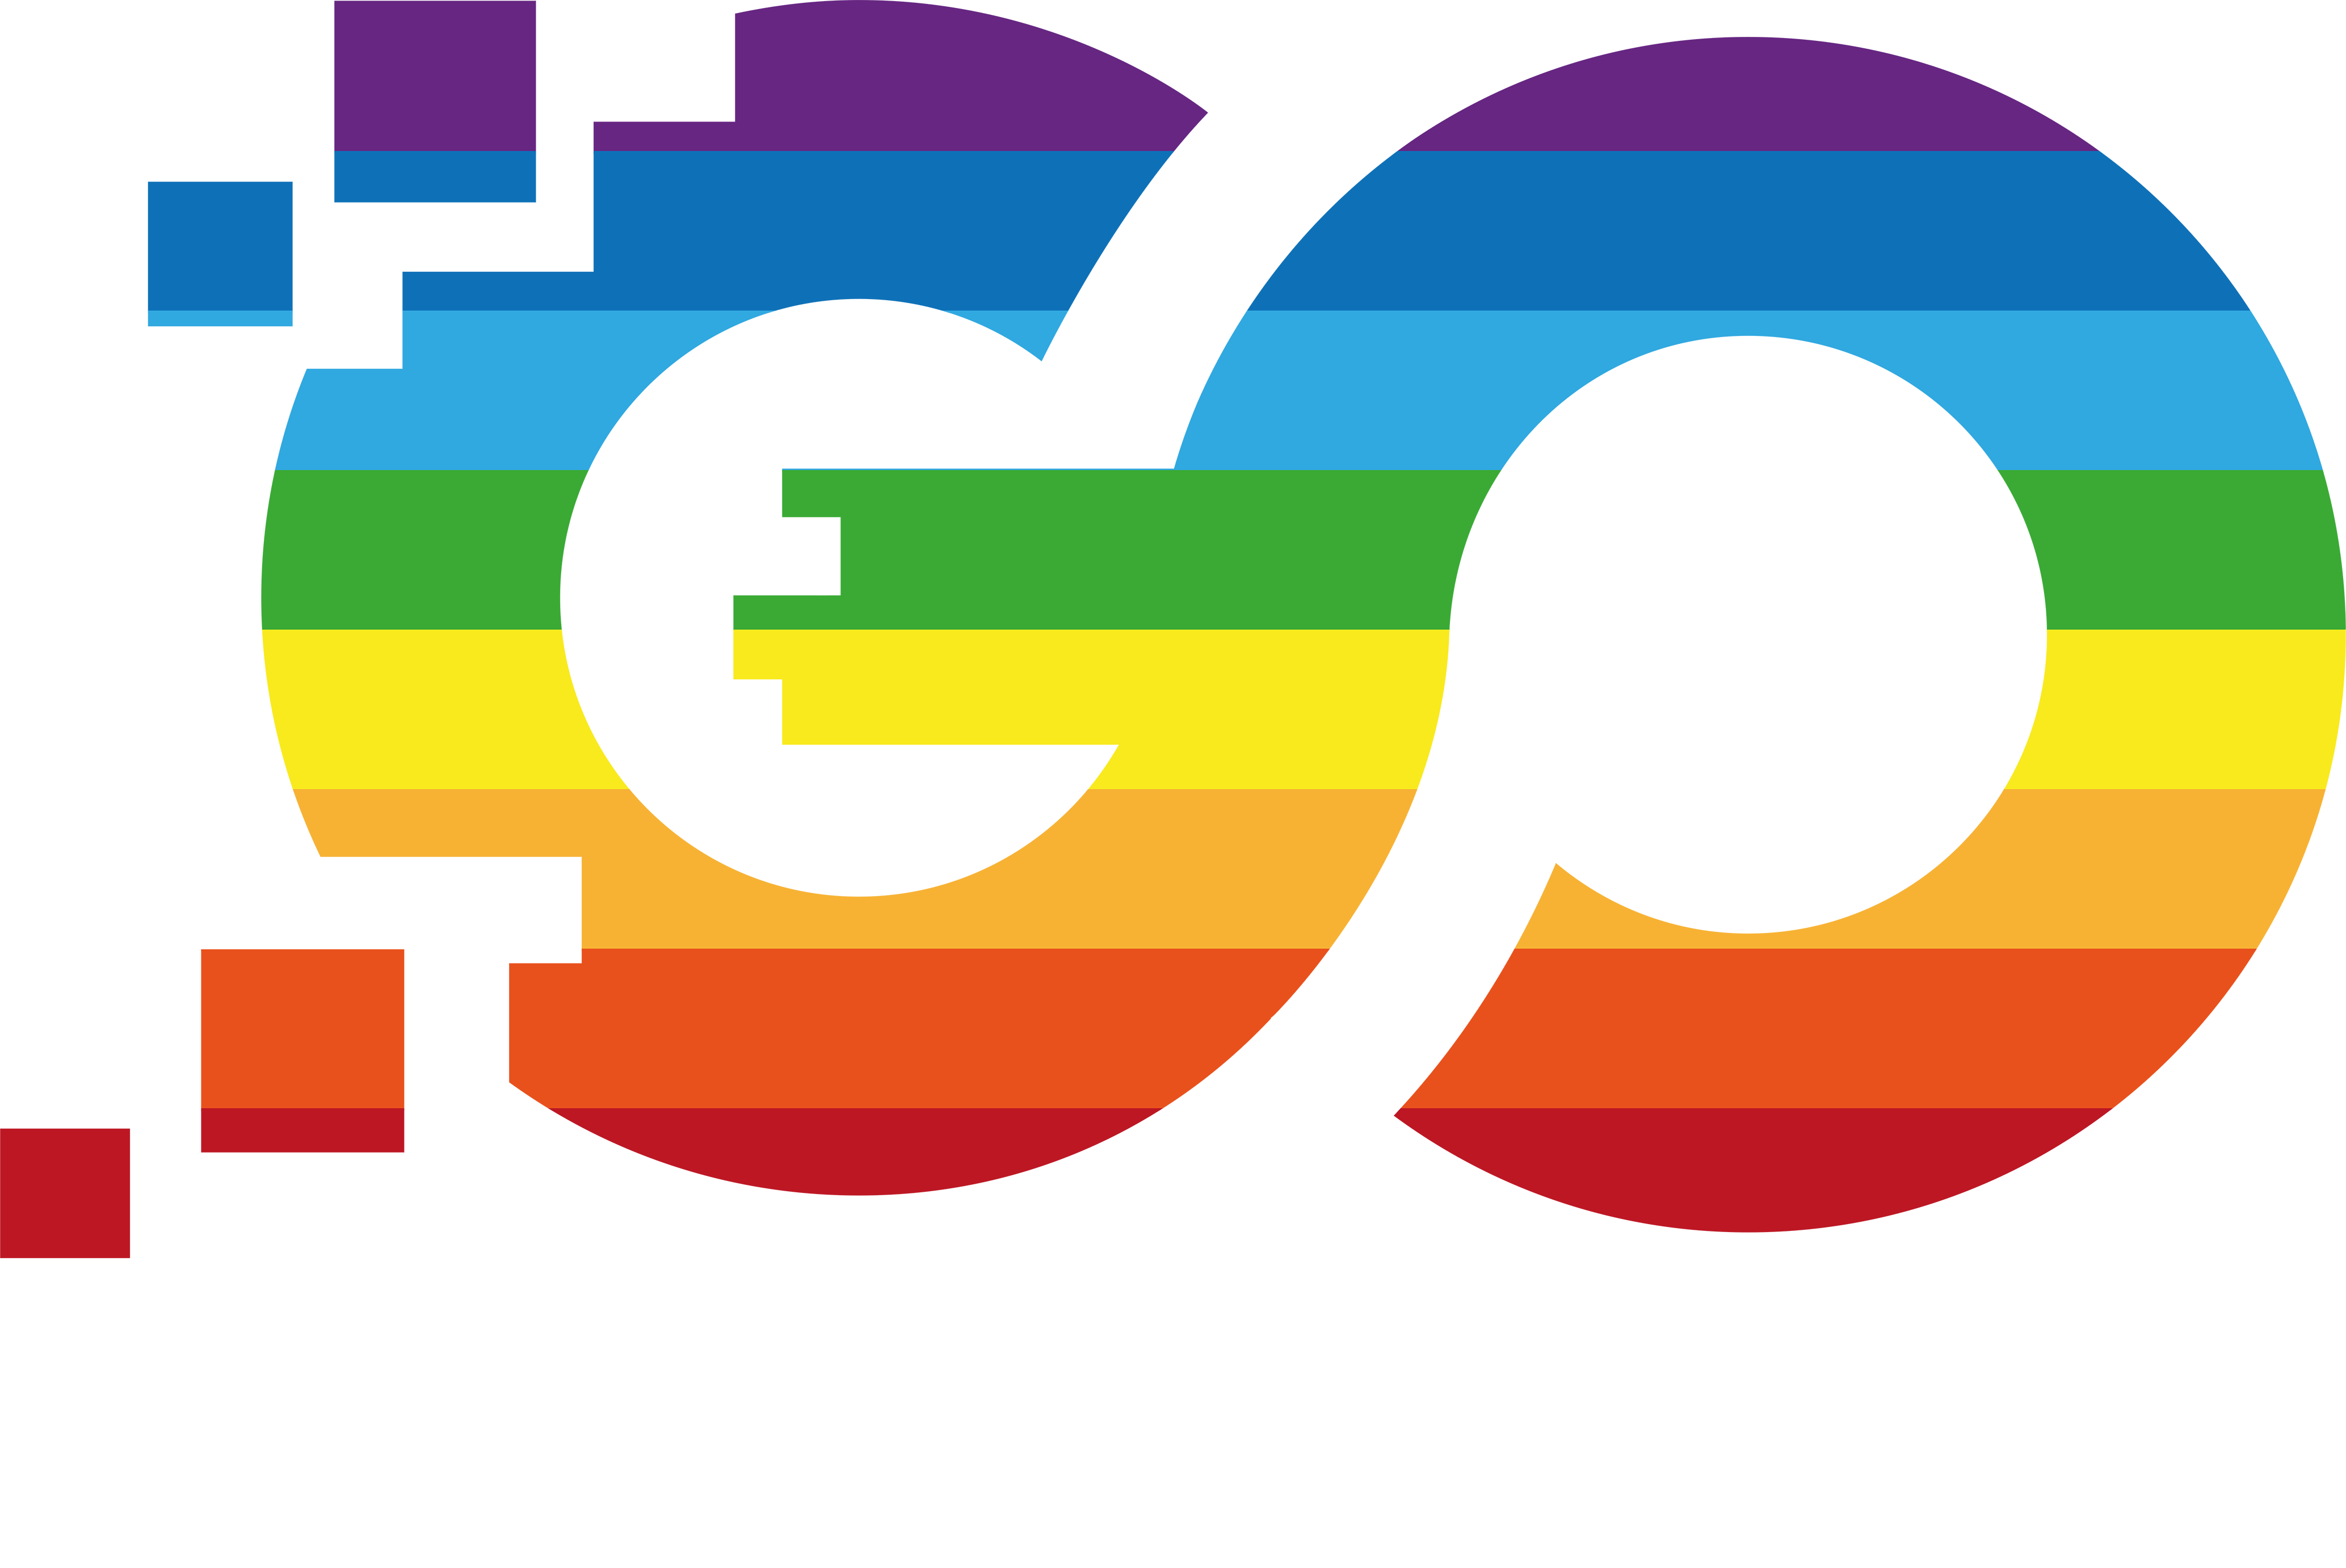 Go Construct Logo